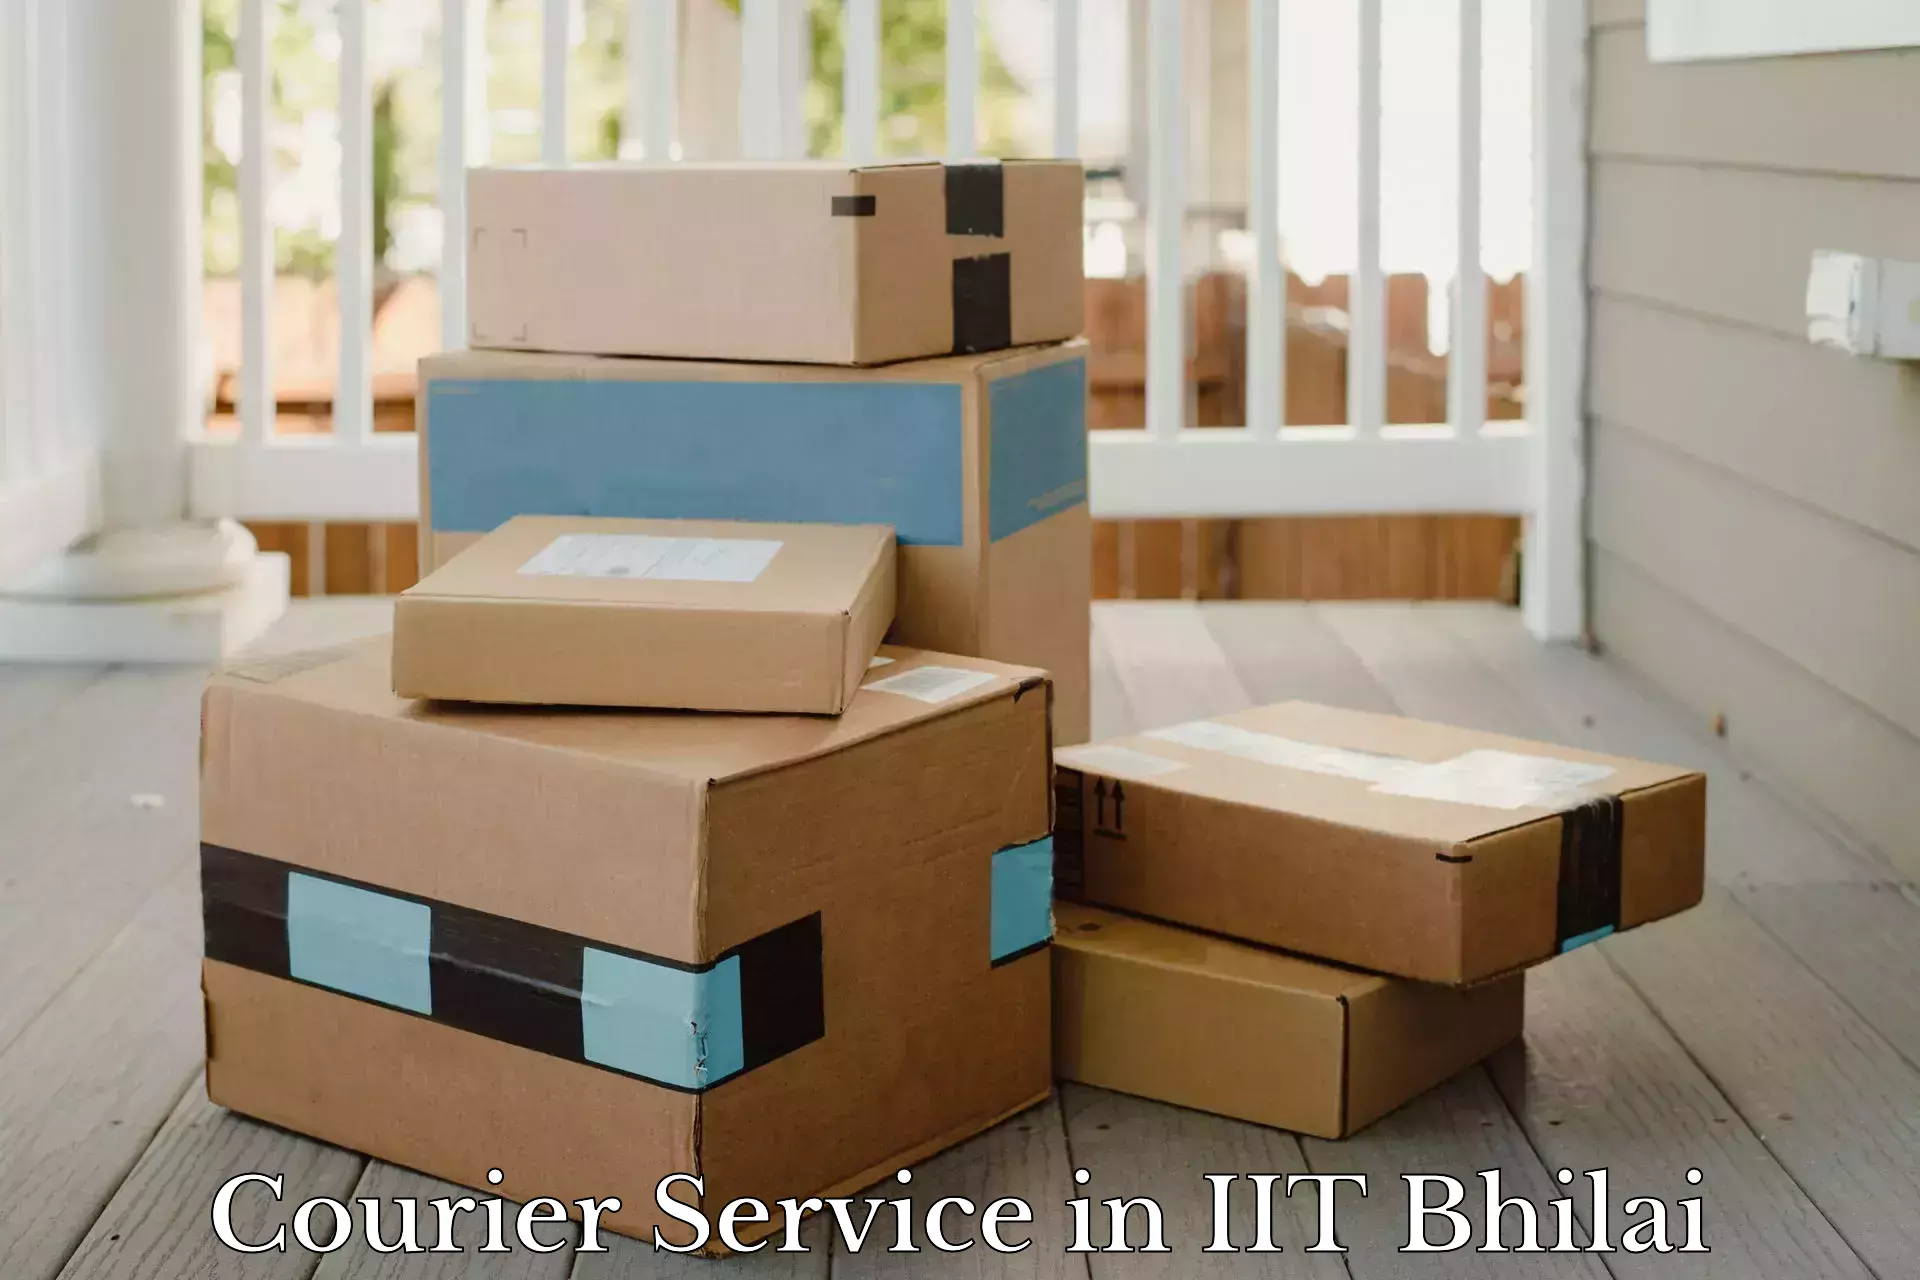 Customizable shipping options in IIT Bhilai